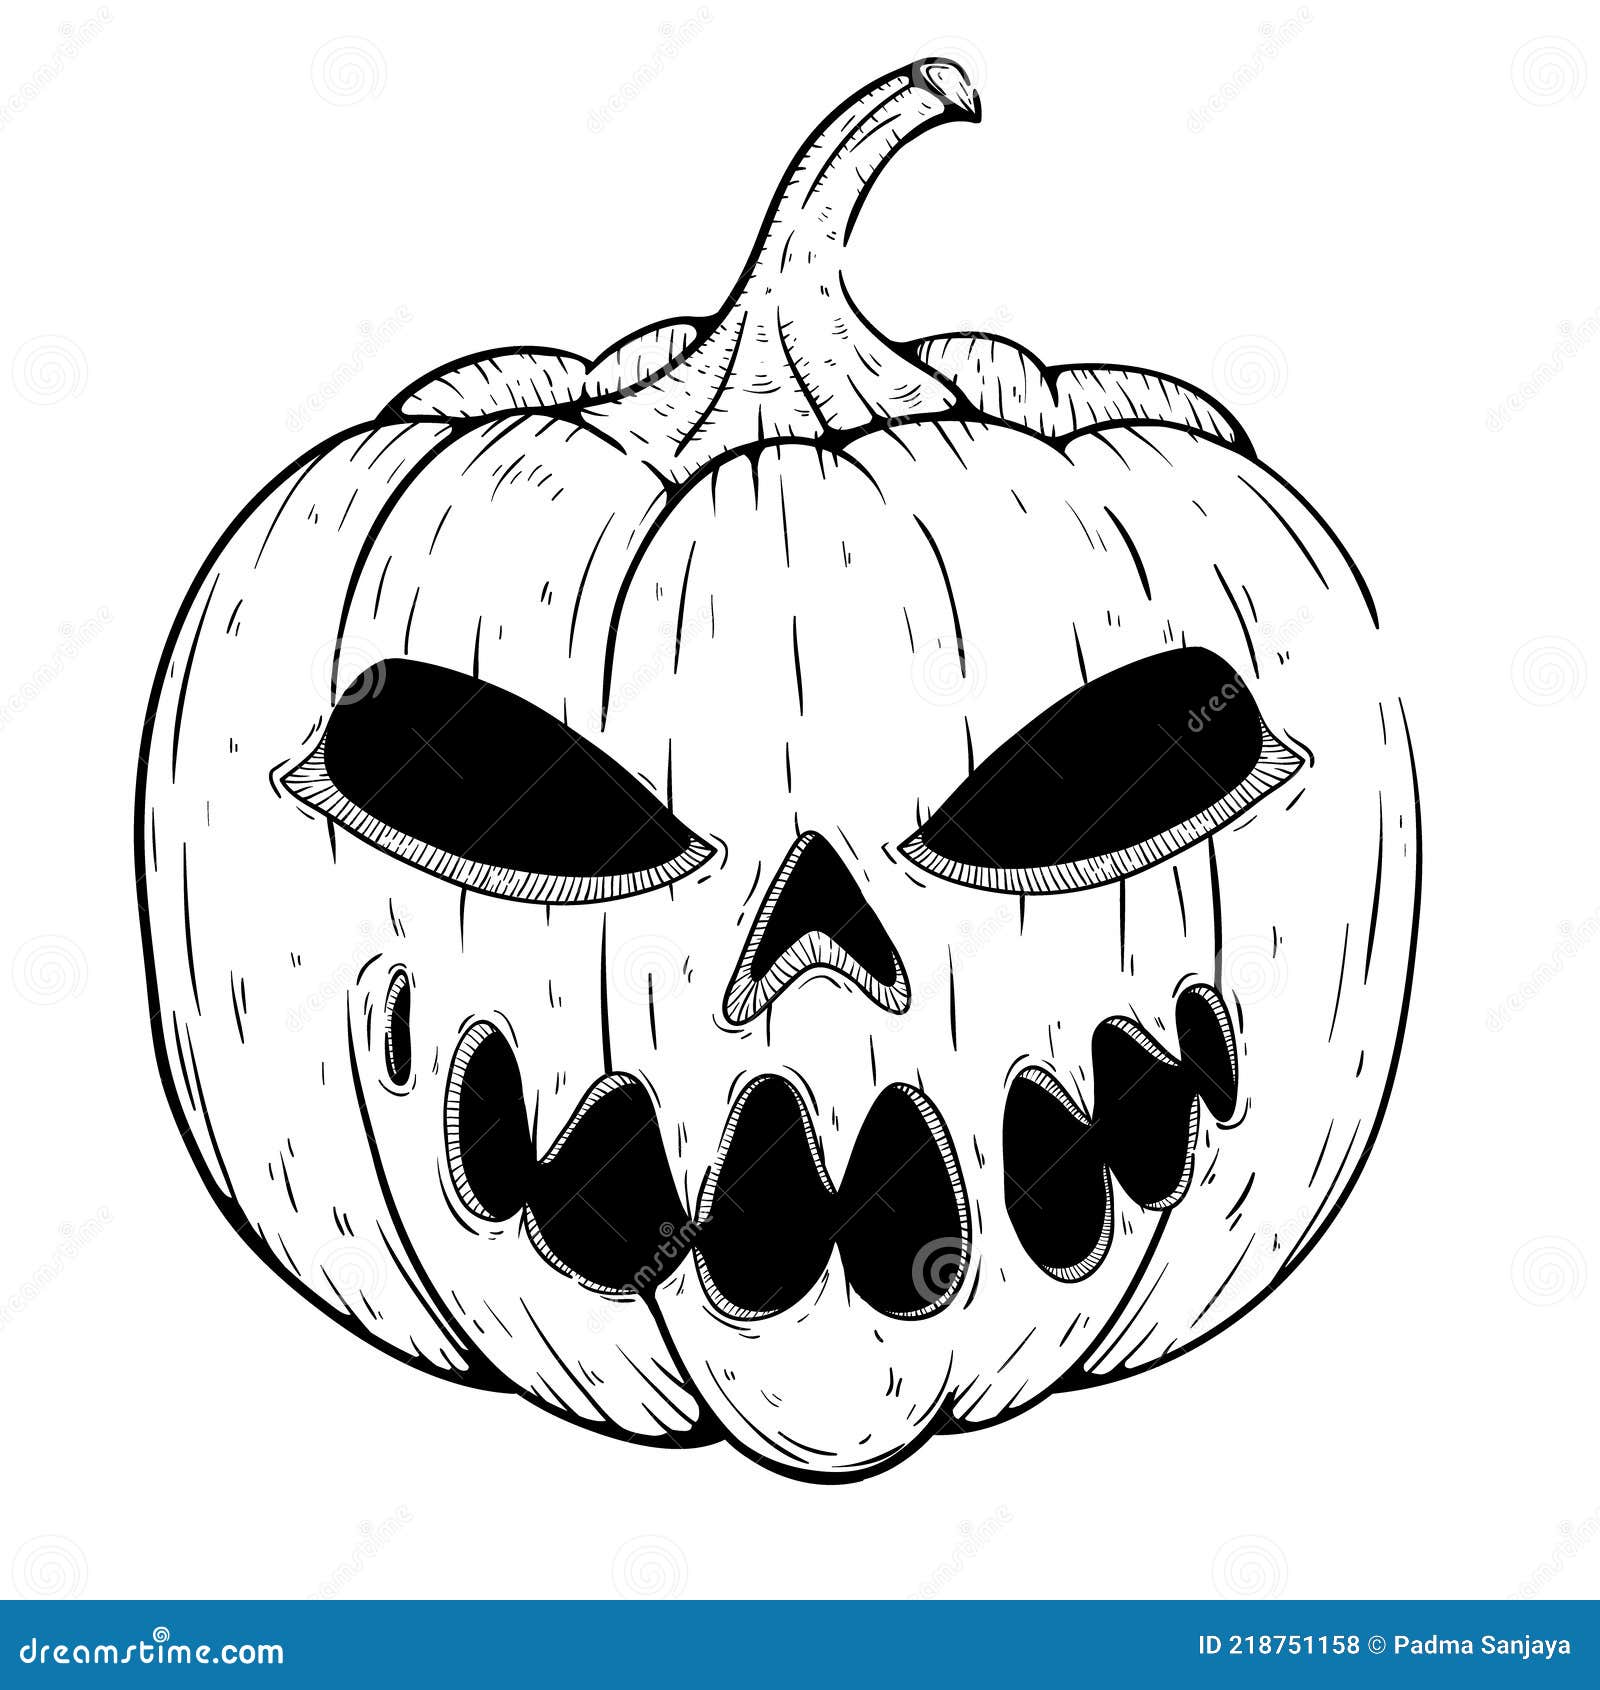 IT Drawing  Scary drawings, Drawings, Halloween drawings